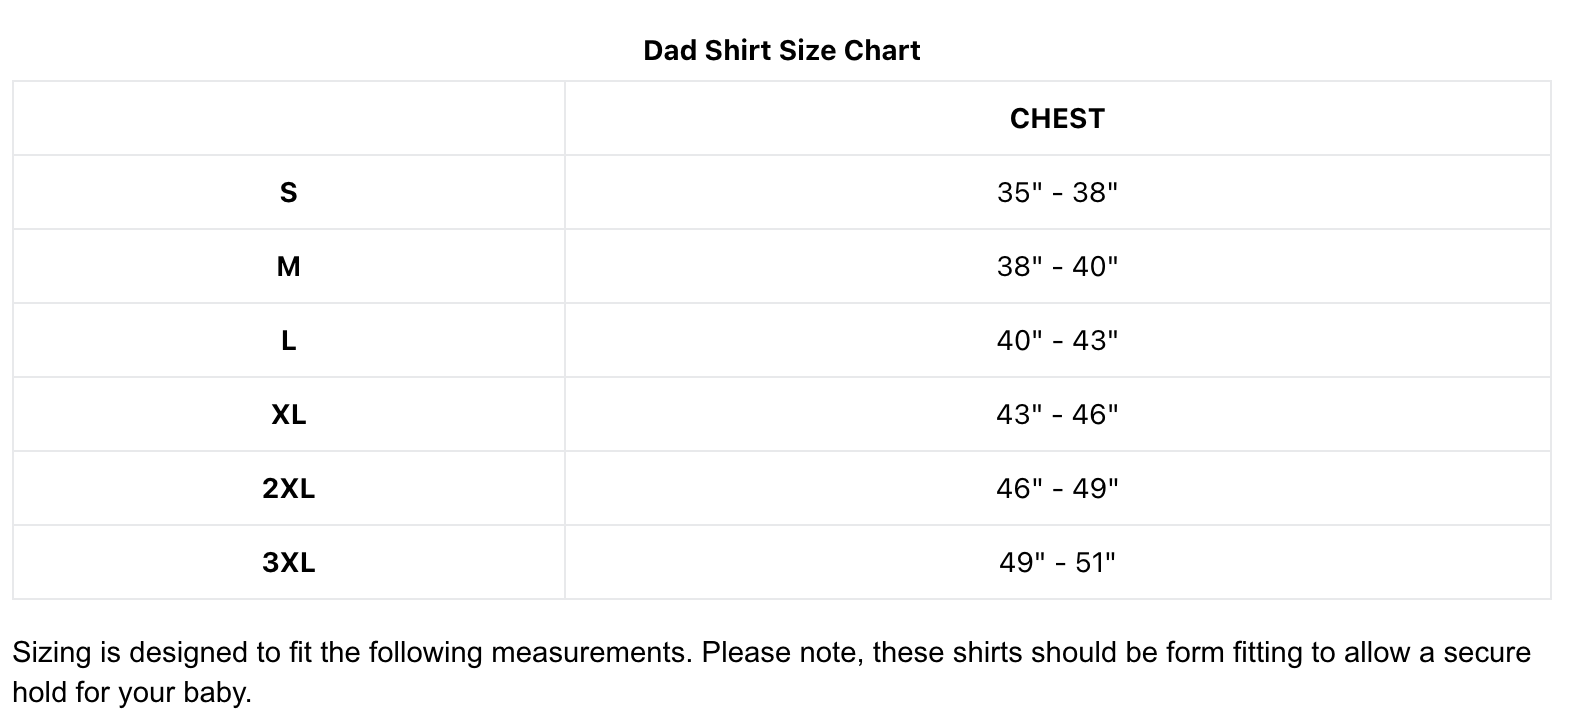 dad shirt size chart